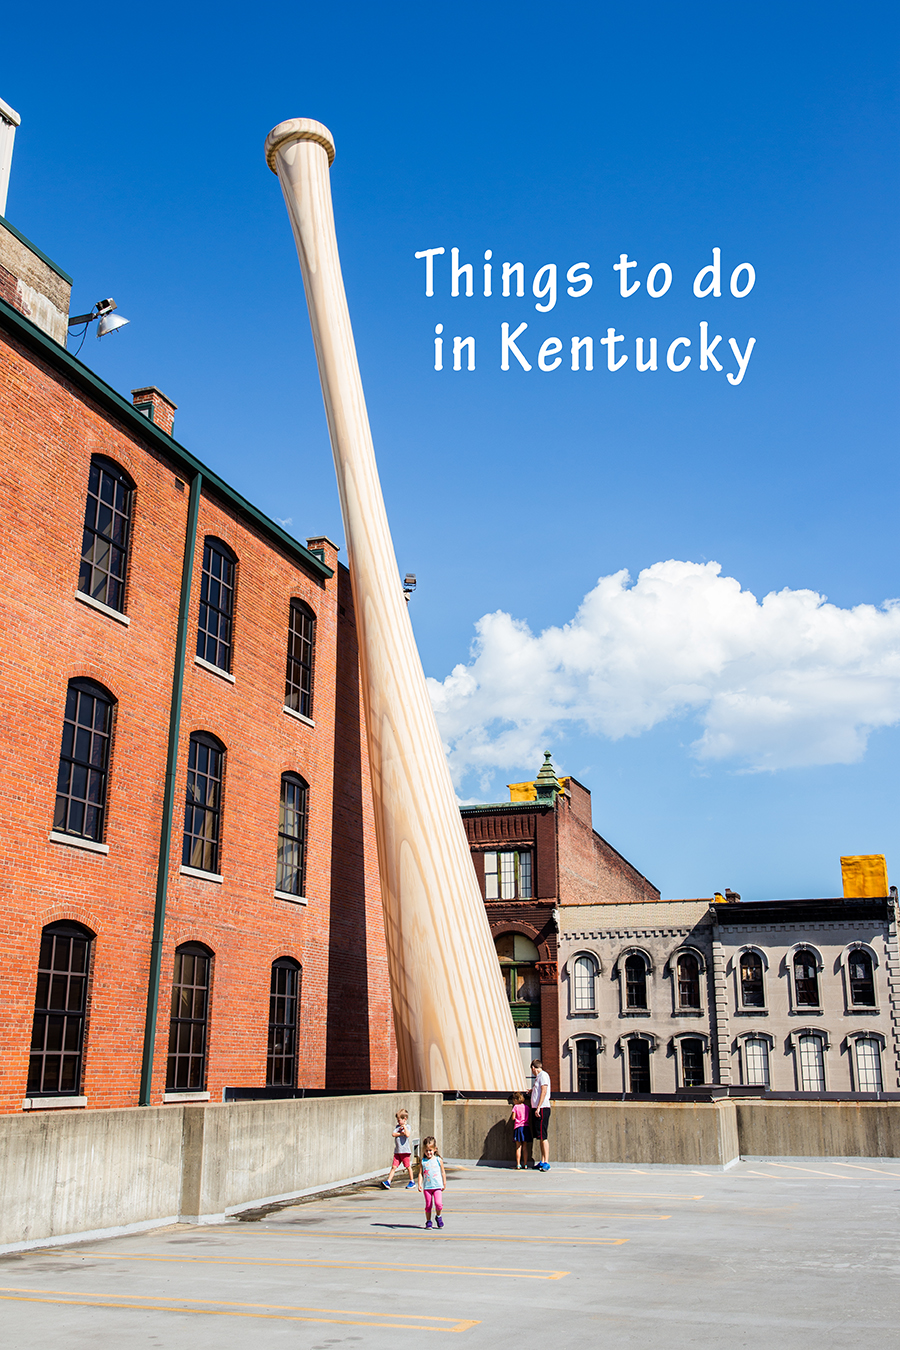 Things to do in Kentucky